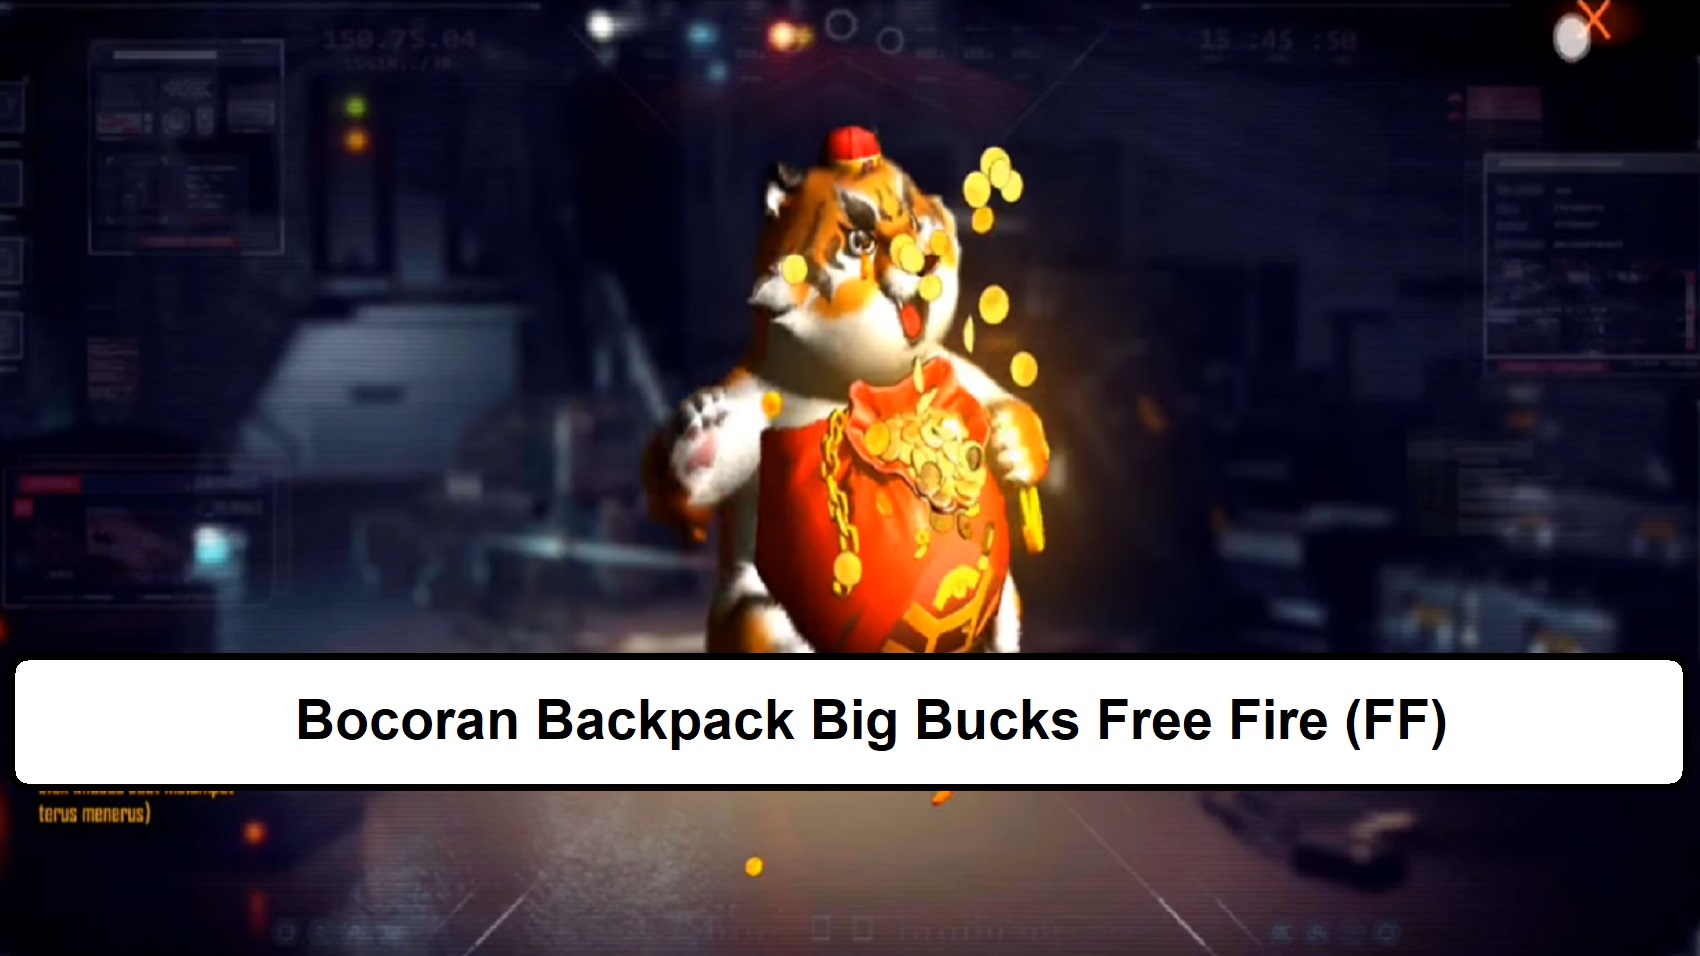 Bocoran Backpack Big Bucks Free Fire (FF)